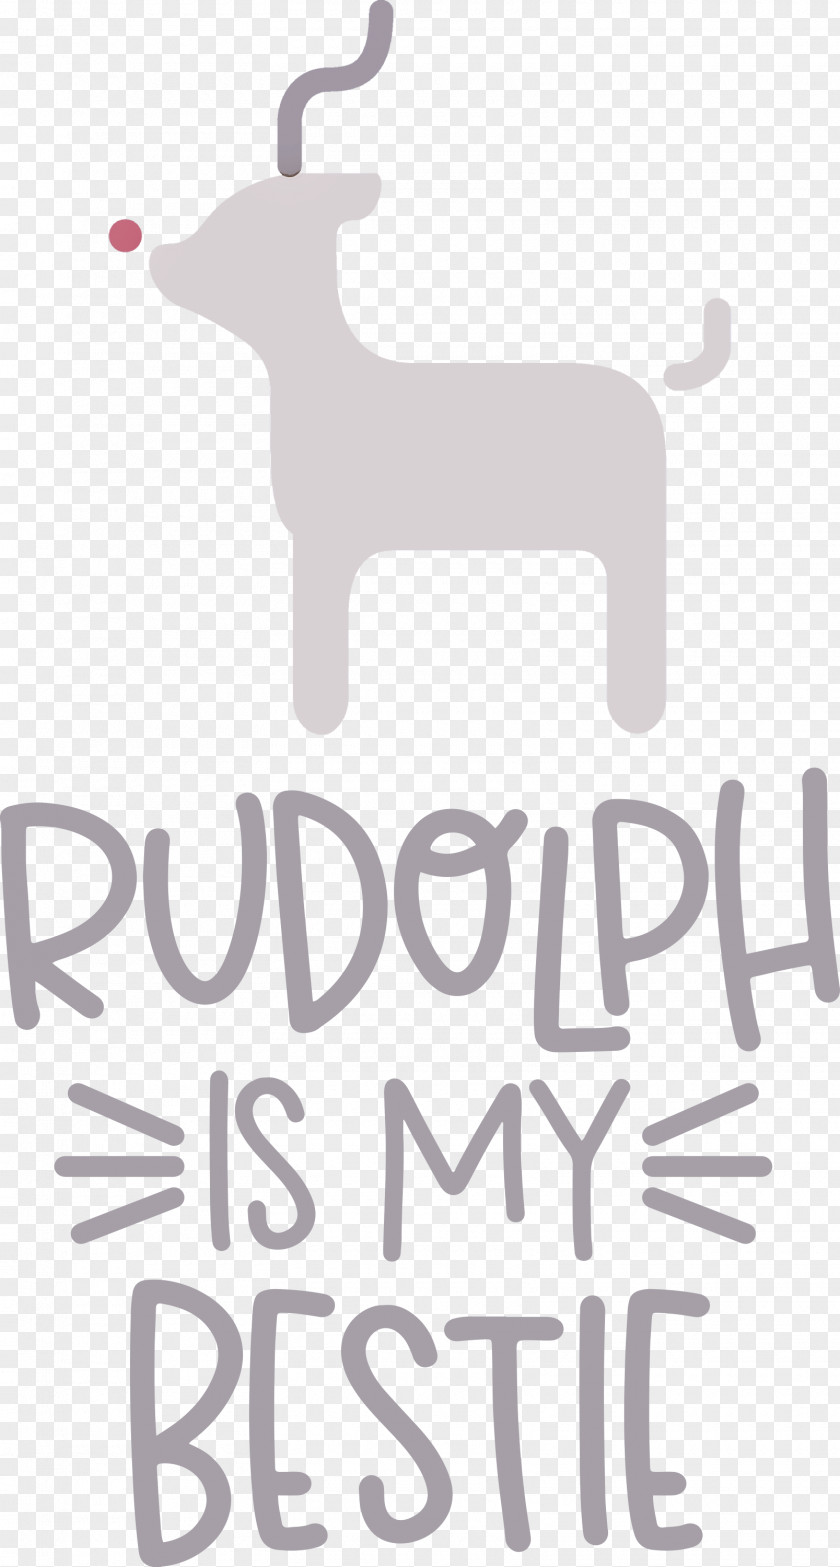 Rudolph Is My Bestie Deer PNG